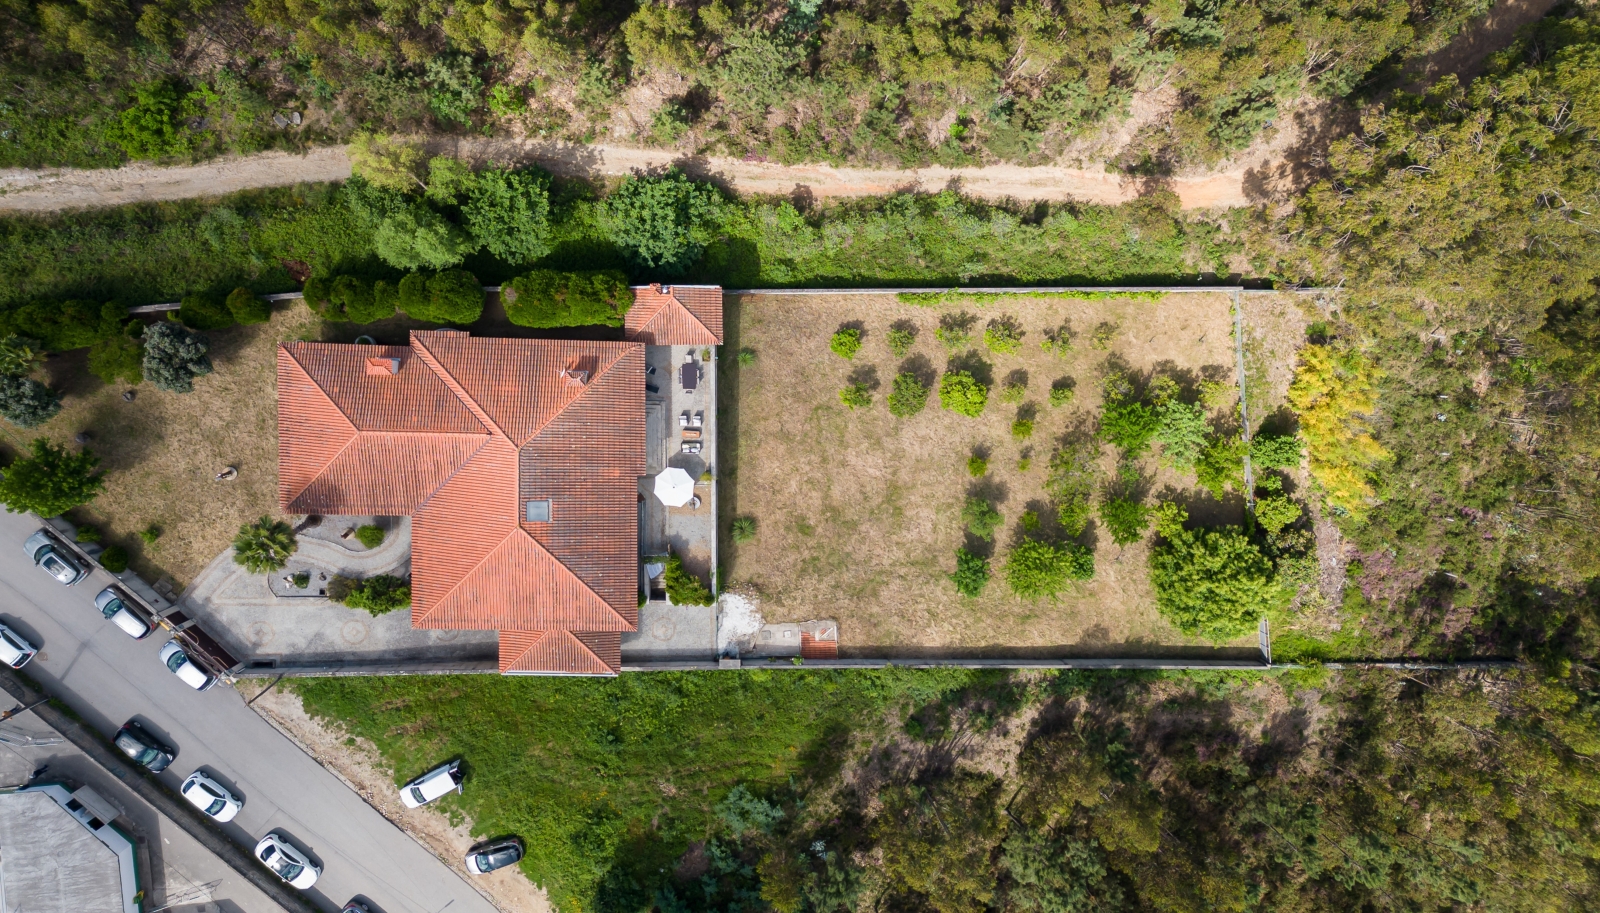 5 bedroom villa with garden and views, for sale, in Foz do Sousa in Gondomar, Porto, Portugal_225231